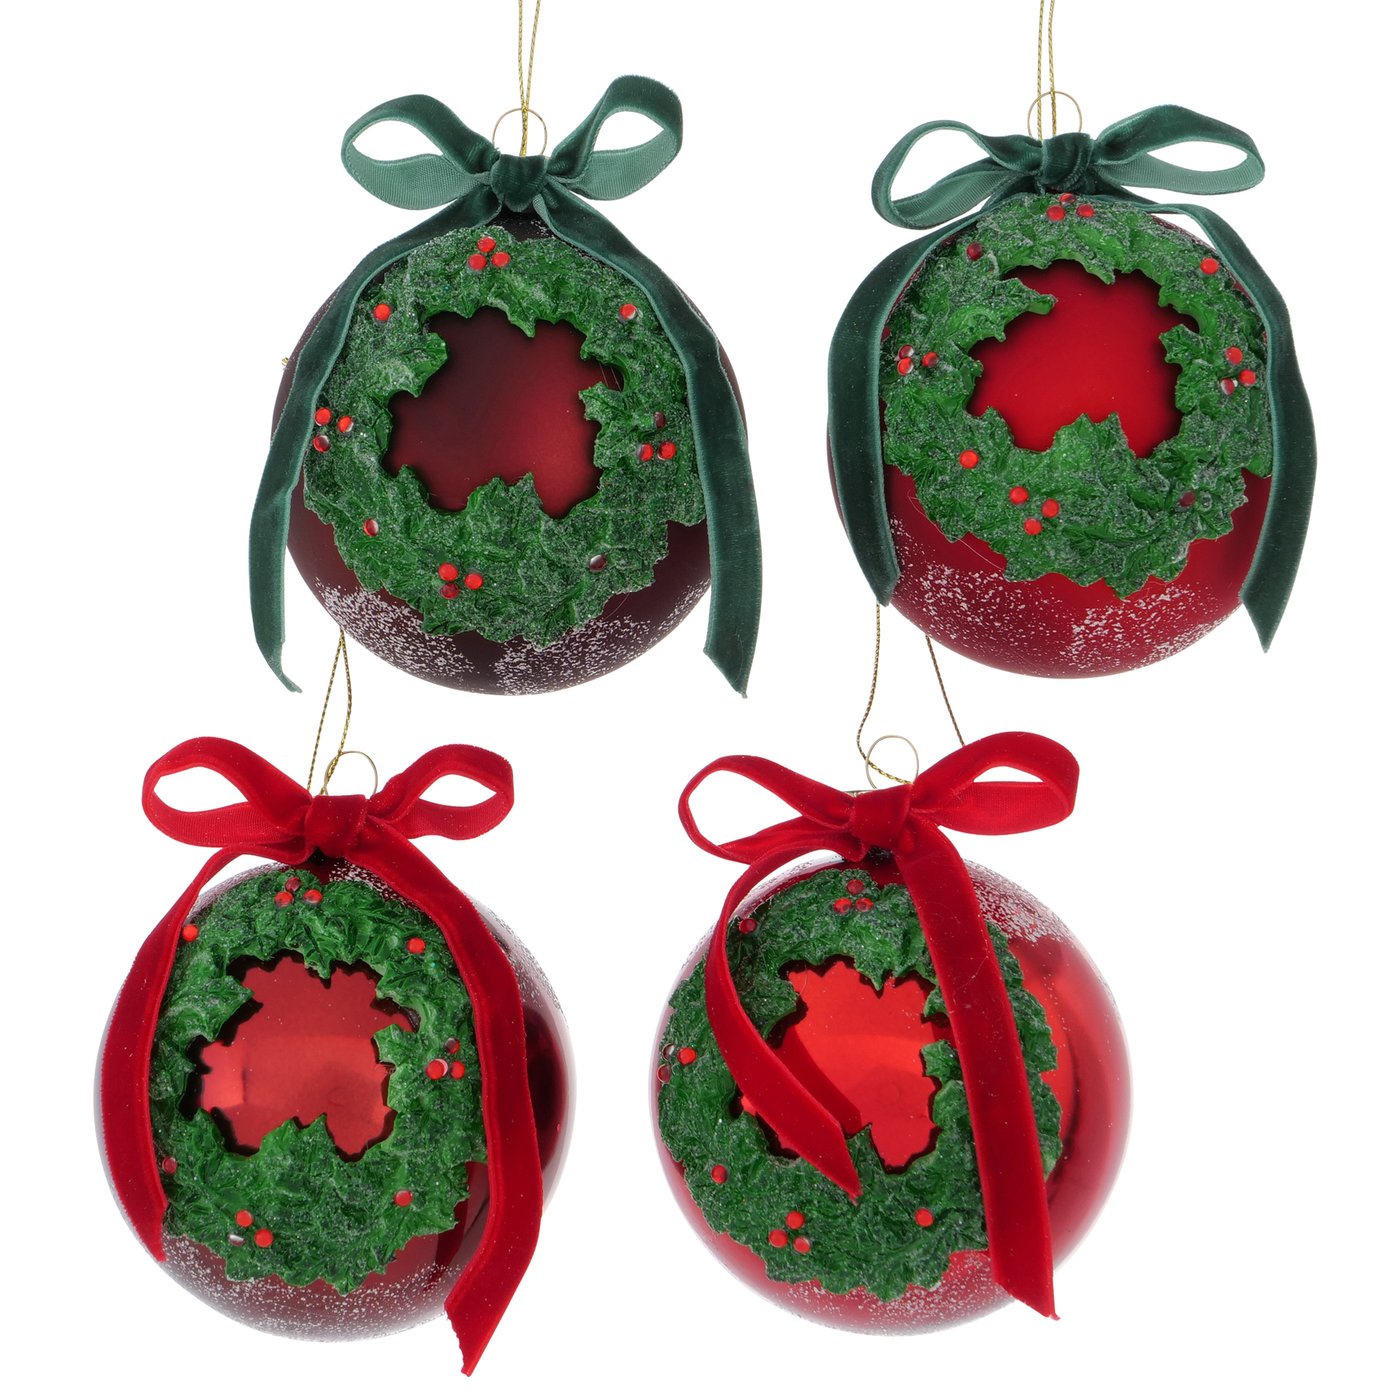 Hochwertige Glas Weihnachtskugeln rot grün 12er Set - D 8cm Handarbeit, 2023467, 4066076050178, Boltze xmas, Christbaumkugel Weihnachtsbaumkugel, 